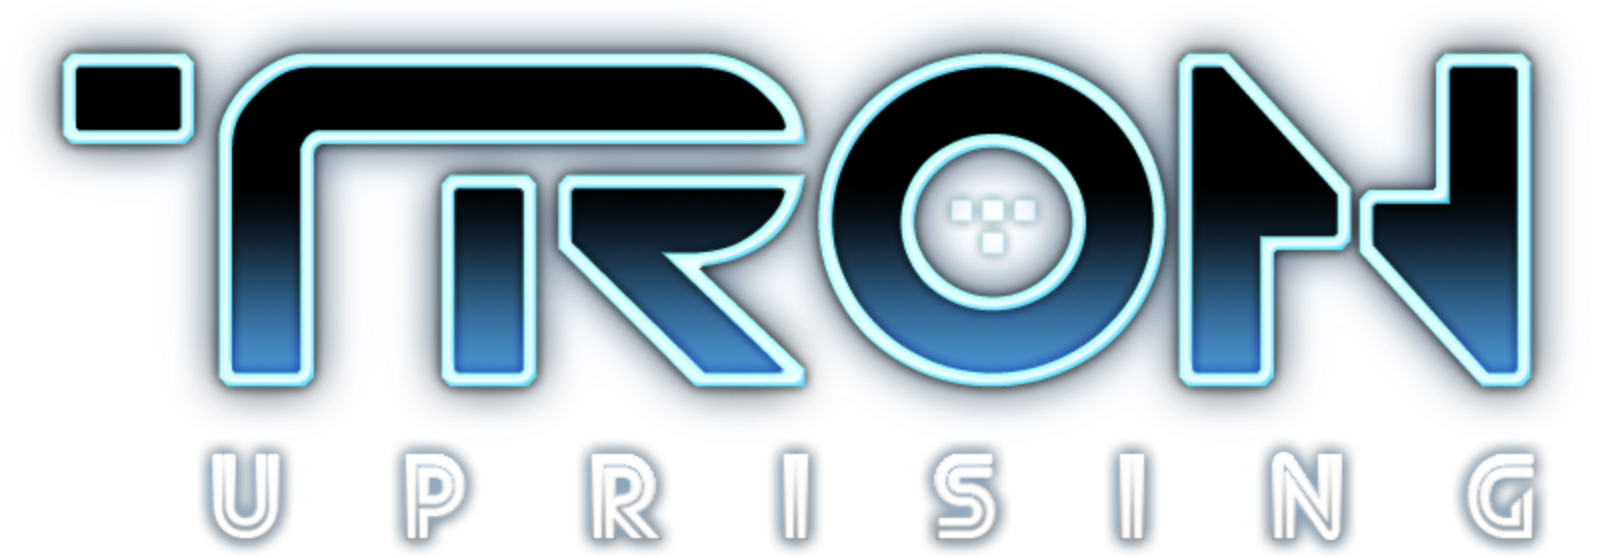 Tron: Uprising Complete (2 DVDs Box Set)